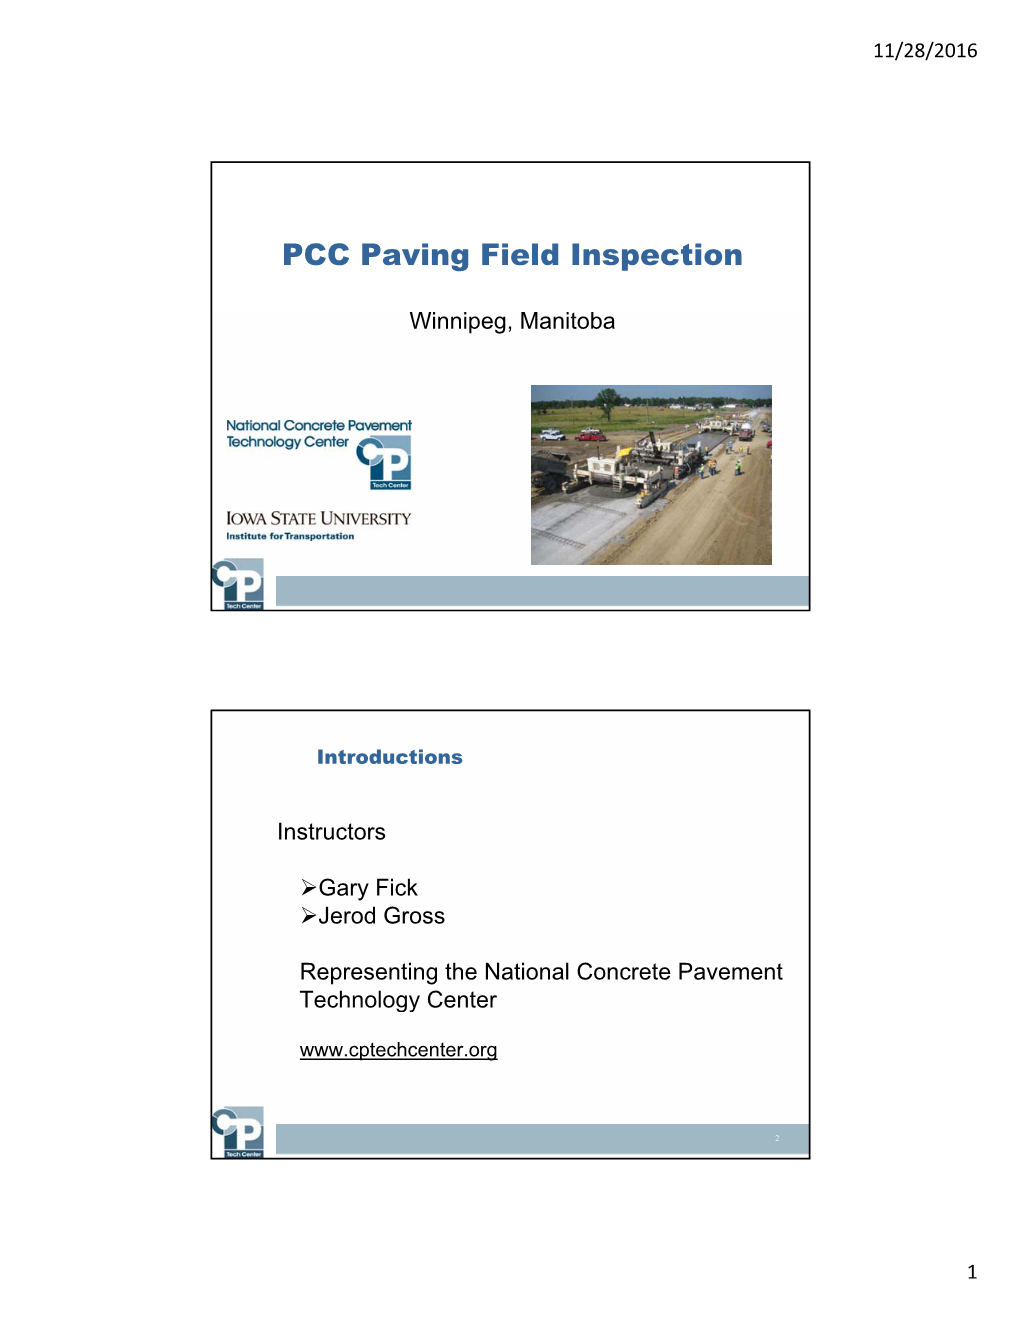 PCC Paving Field Inspection